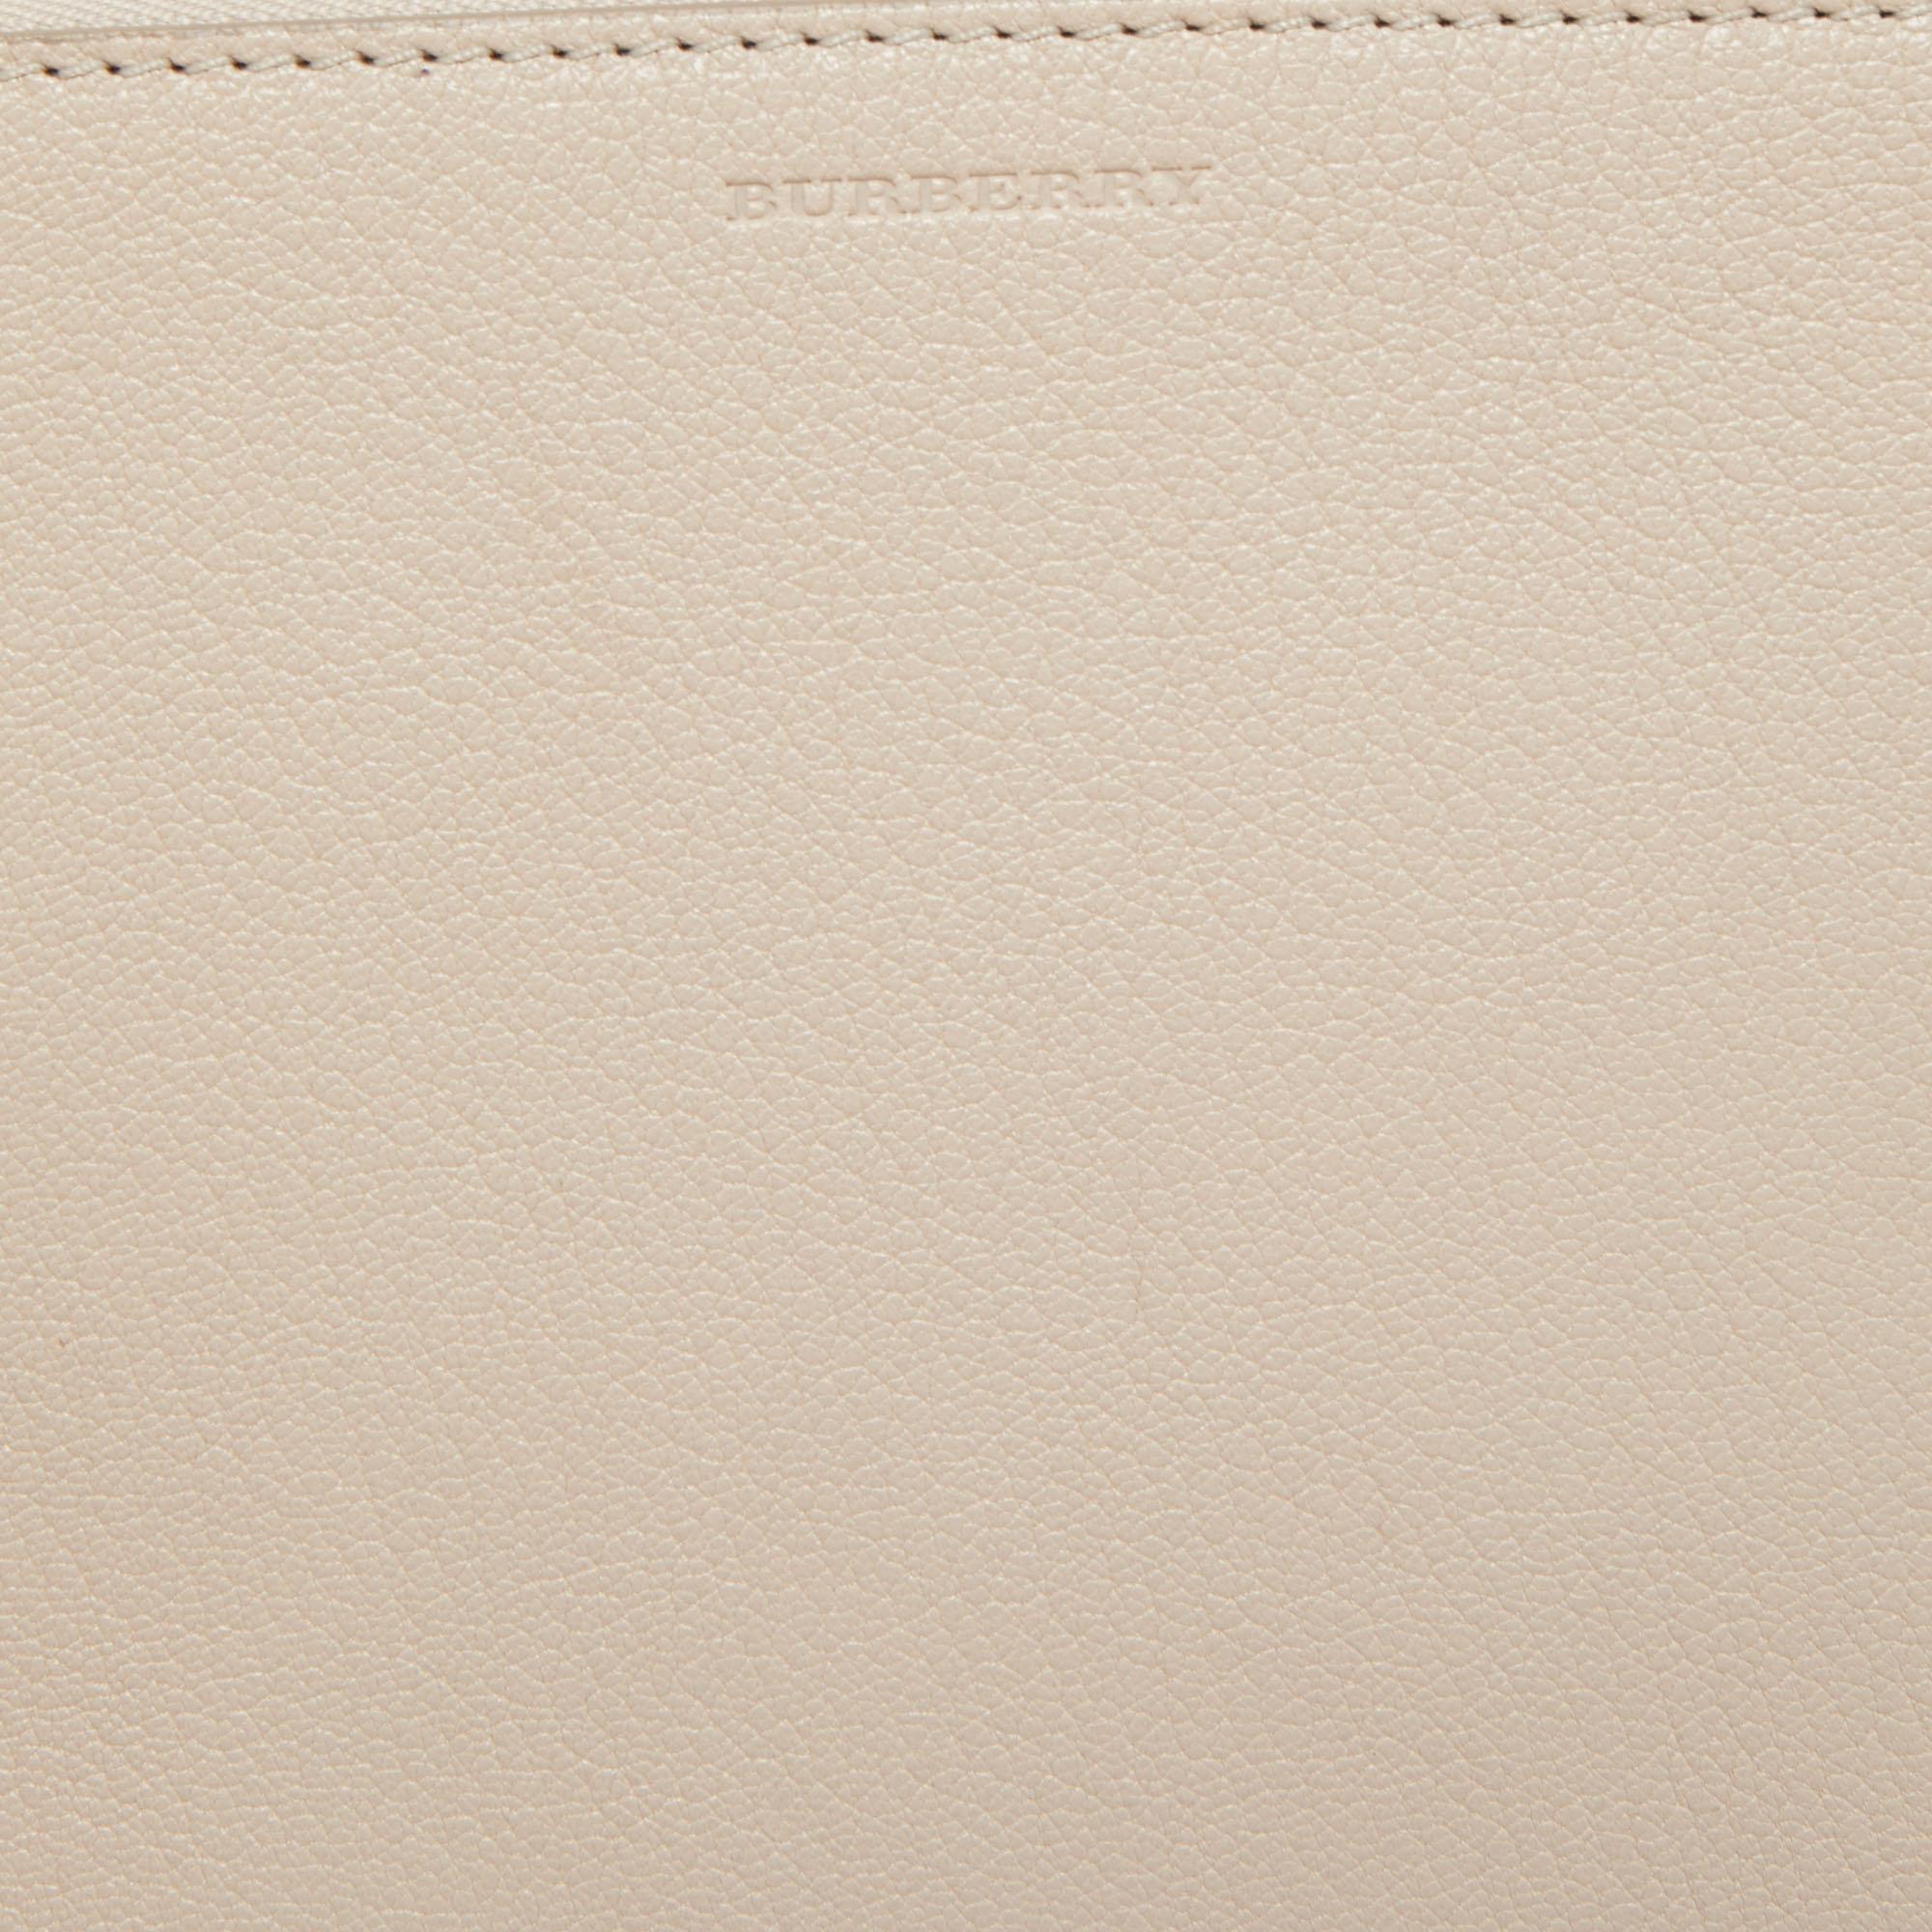 Burberry Cream Leather Triple Zip Crossbody Bag 6